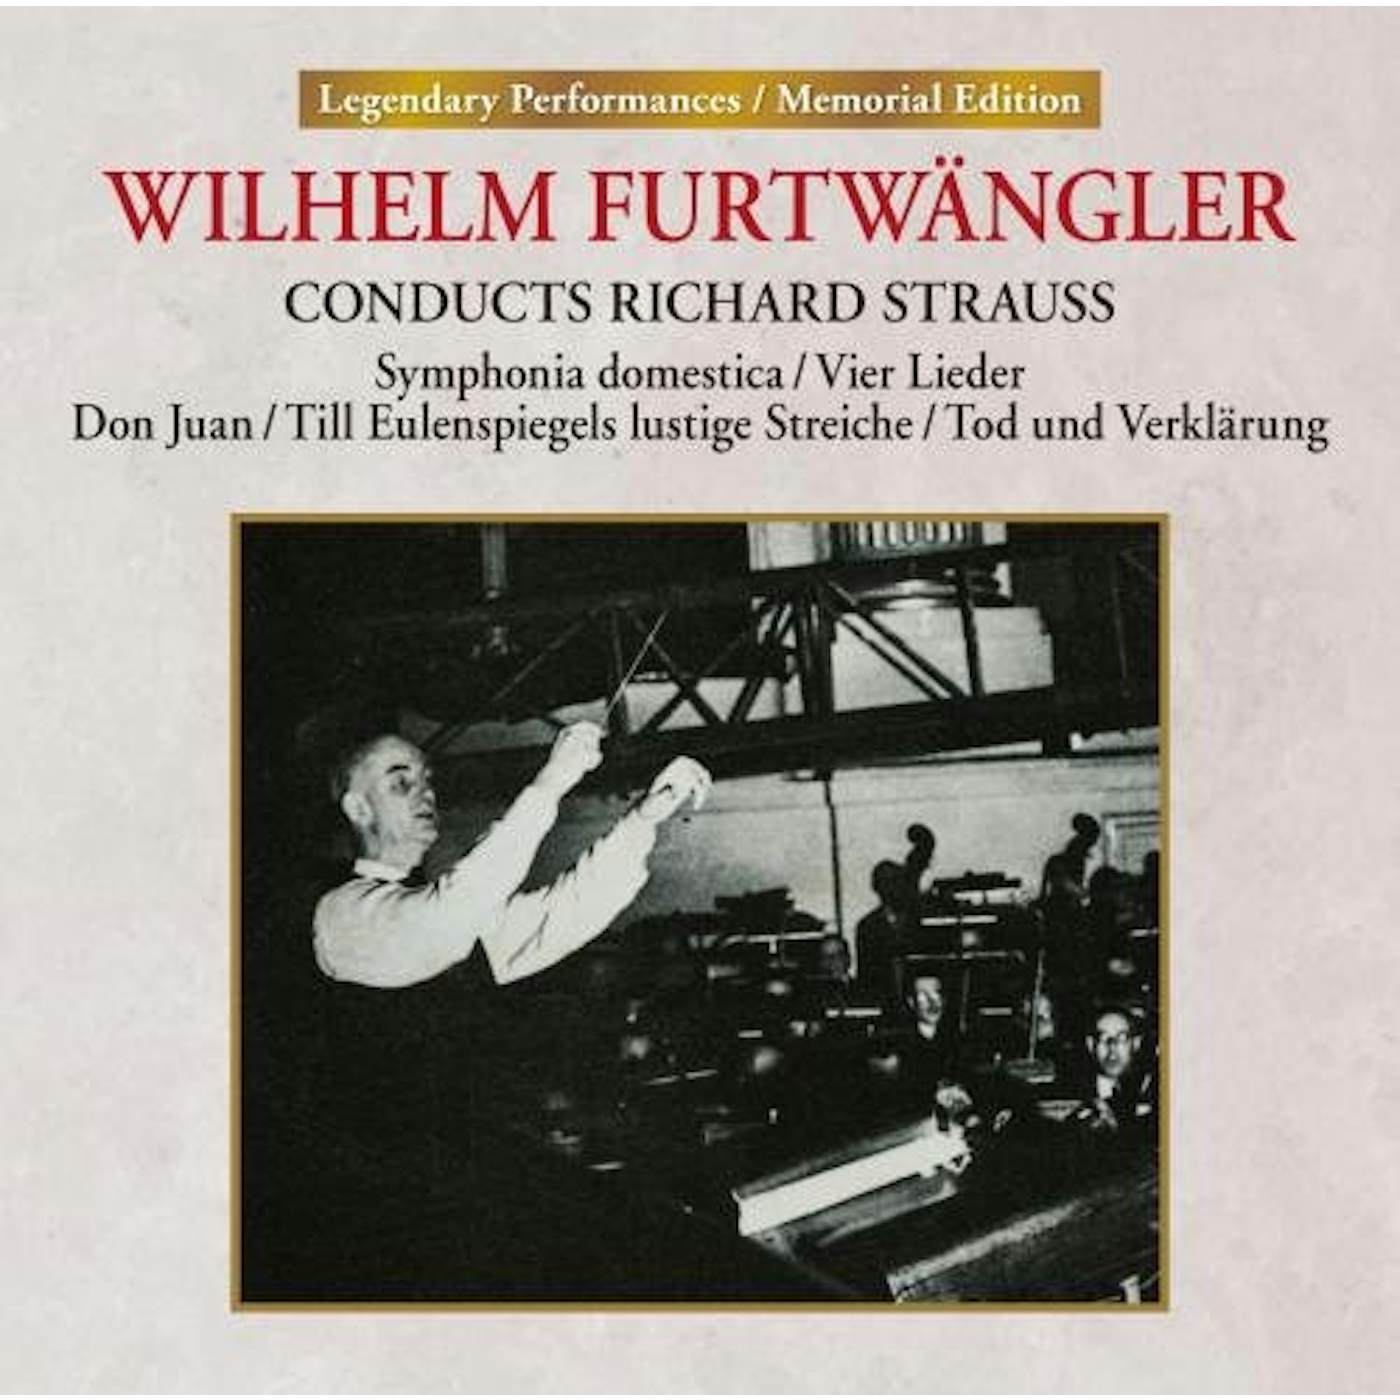 Wilhelm Furtwängler CONDUCTS RICHARD STRAUSS CD